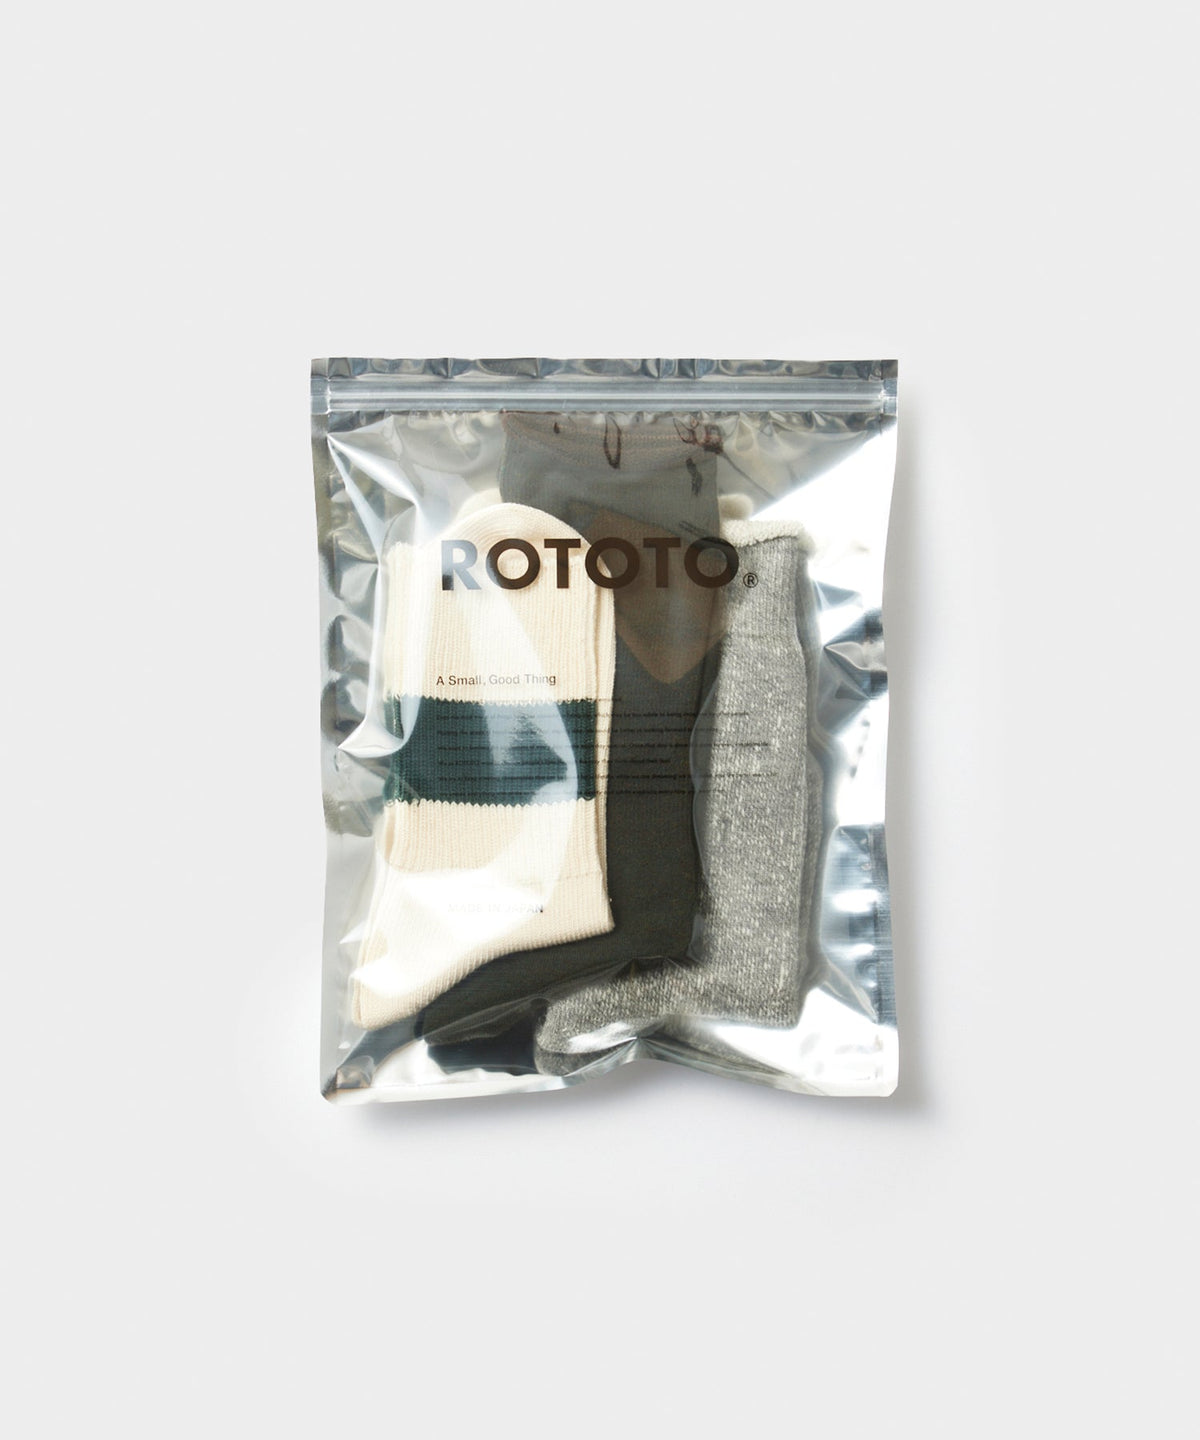 RoToTo Organic Cotton Special Trio Sock in Mix Green